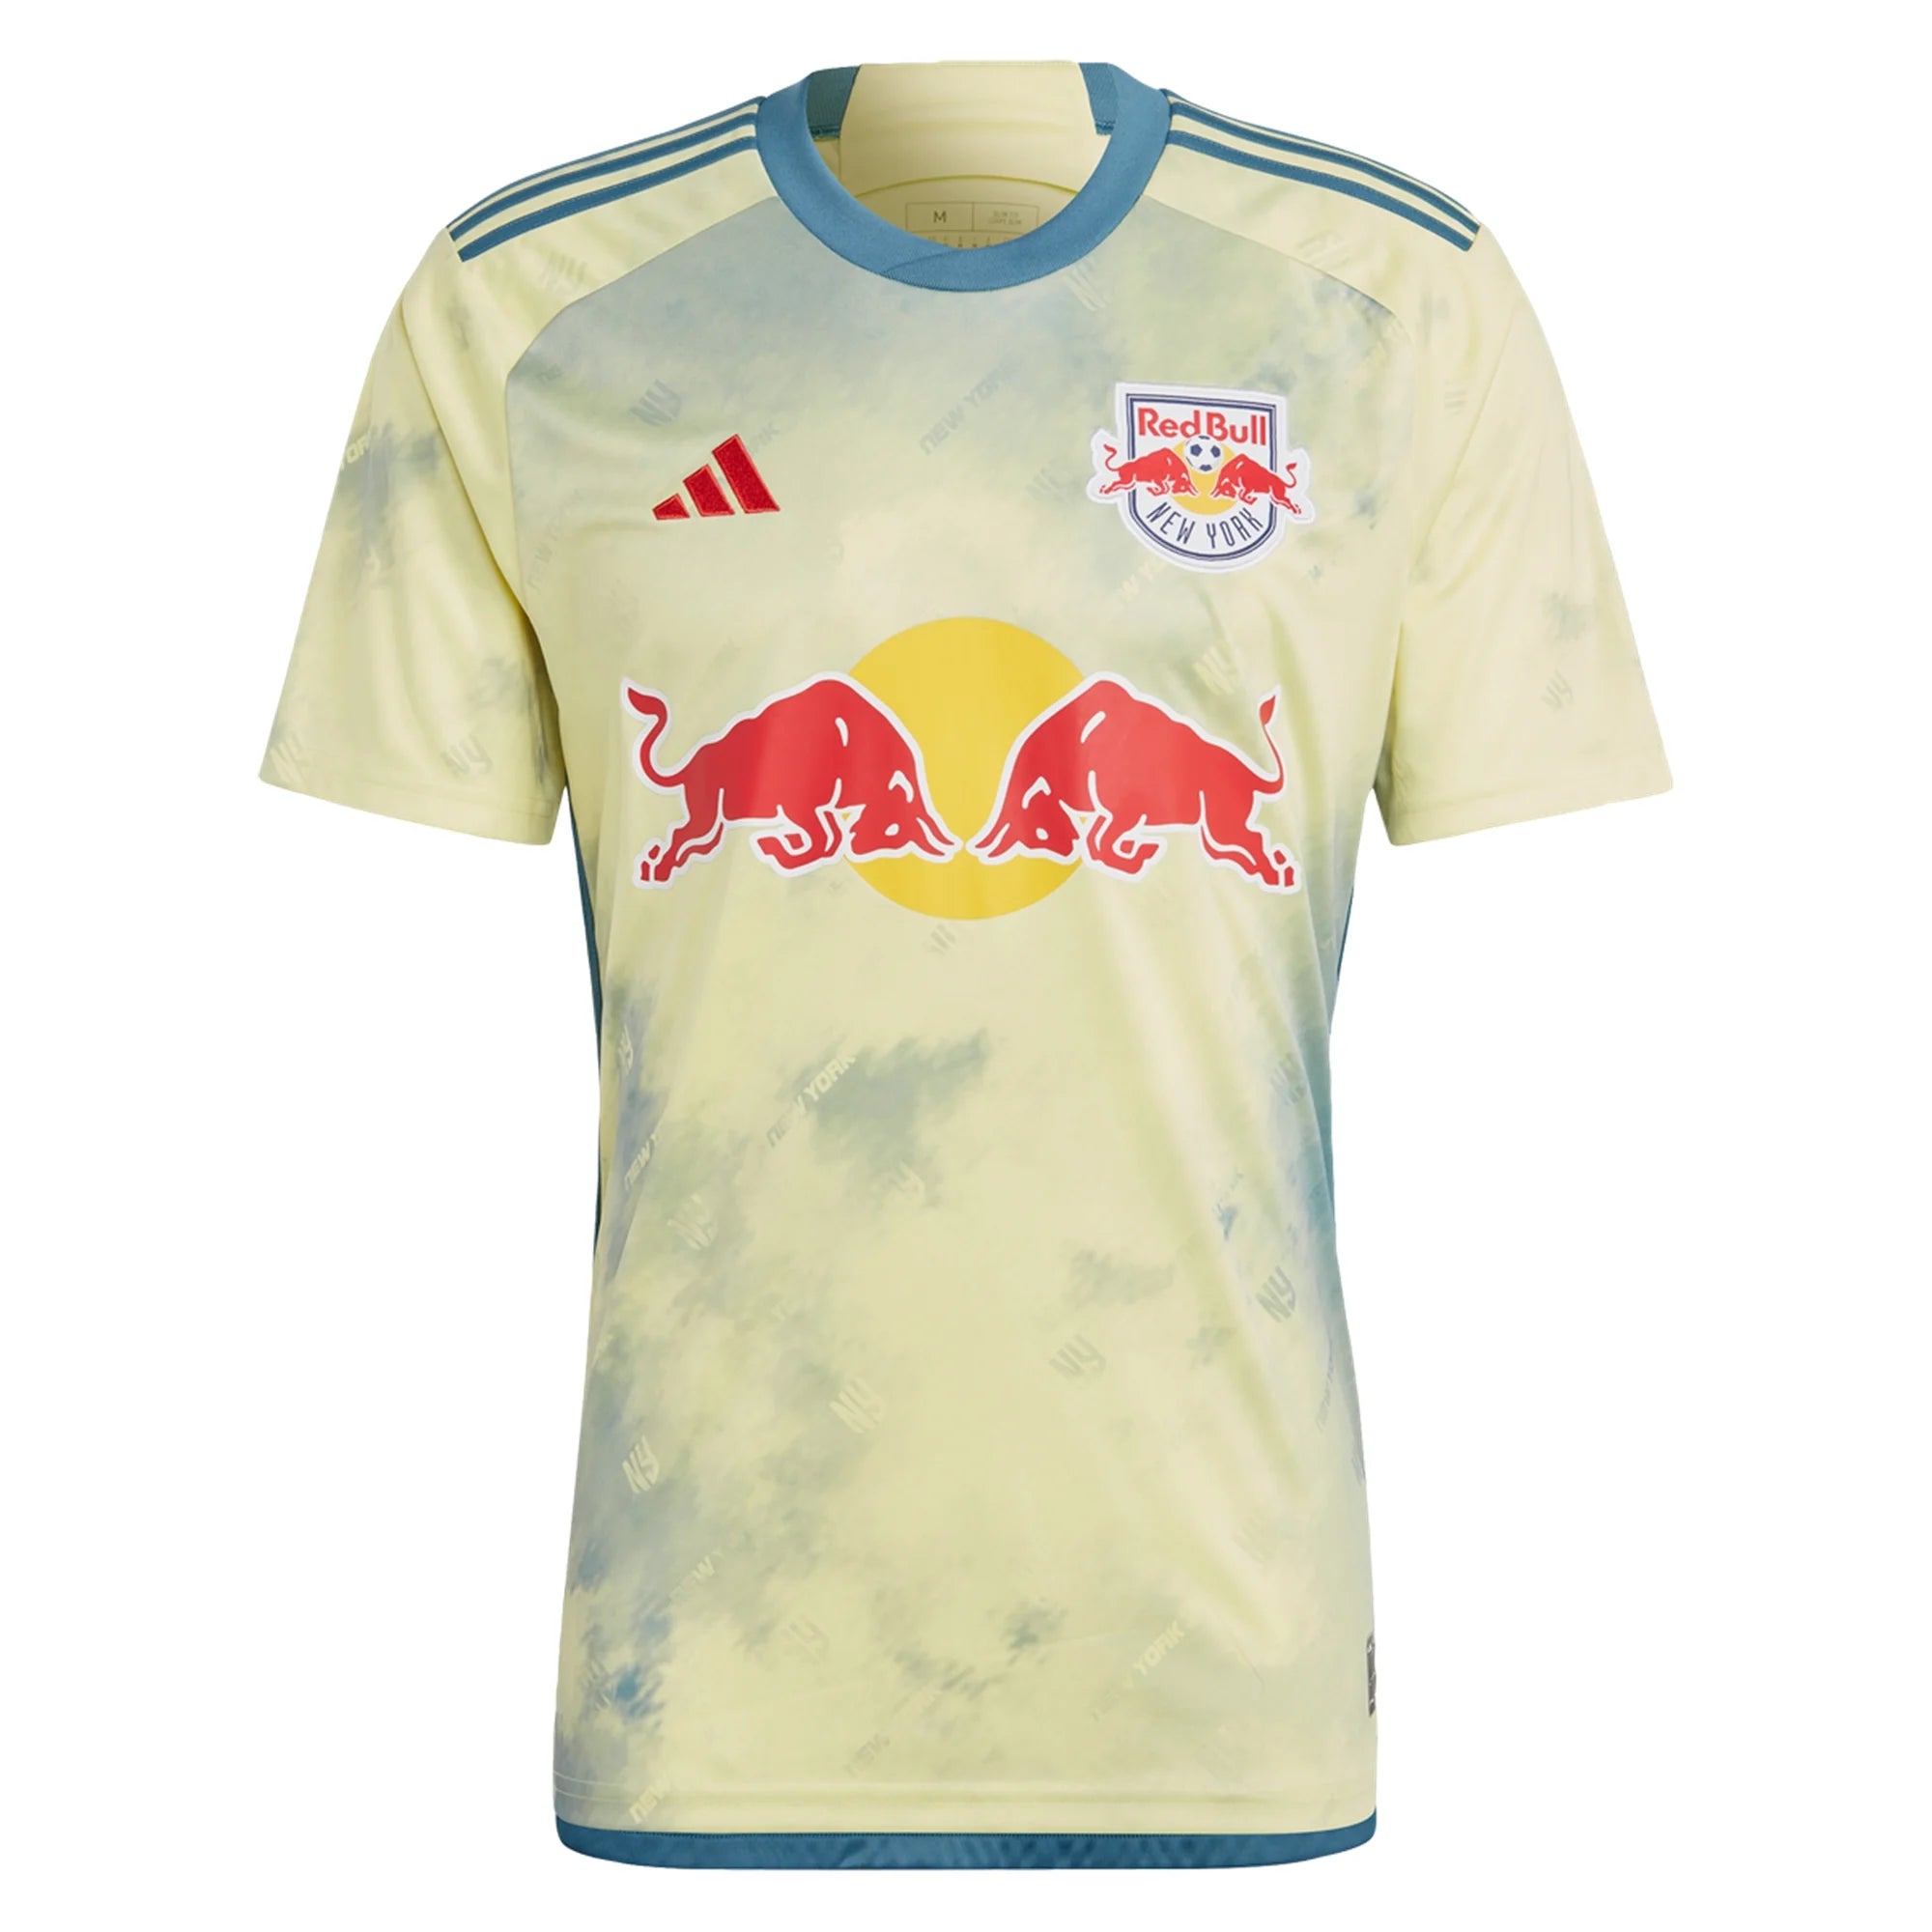 New York Red Bulls 2018 adidas Kit - SoccerBible